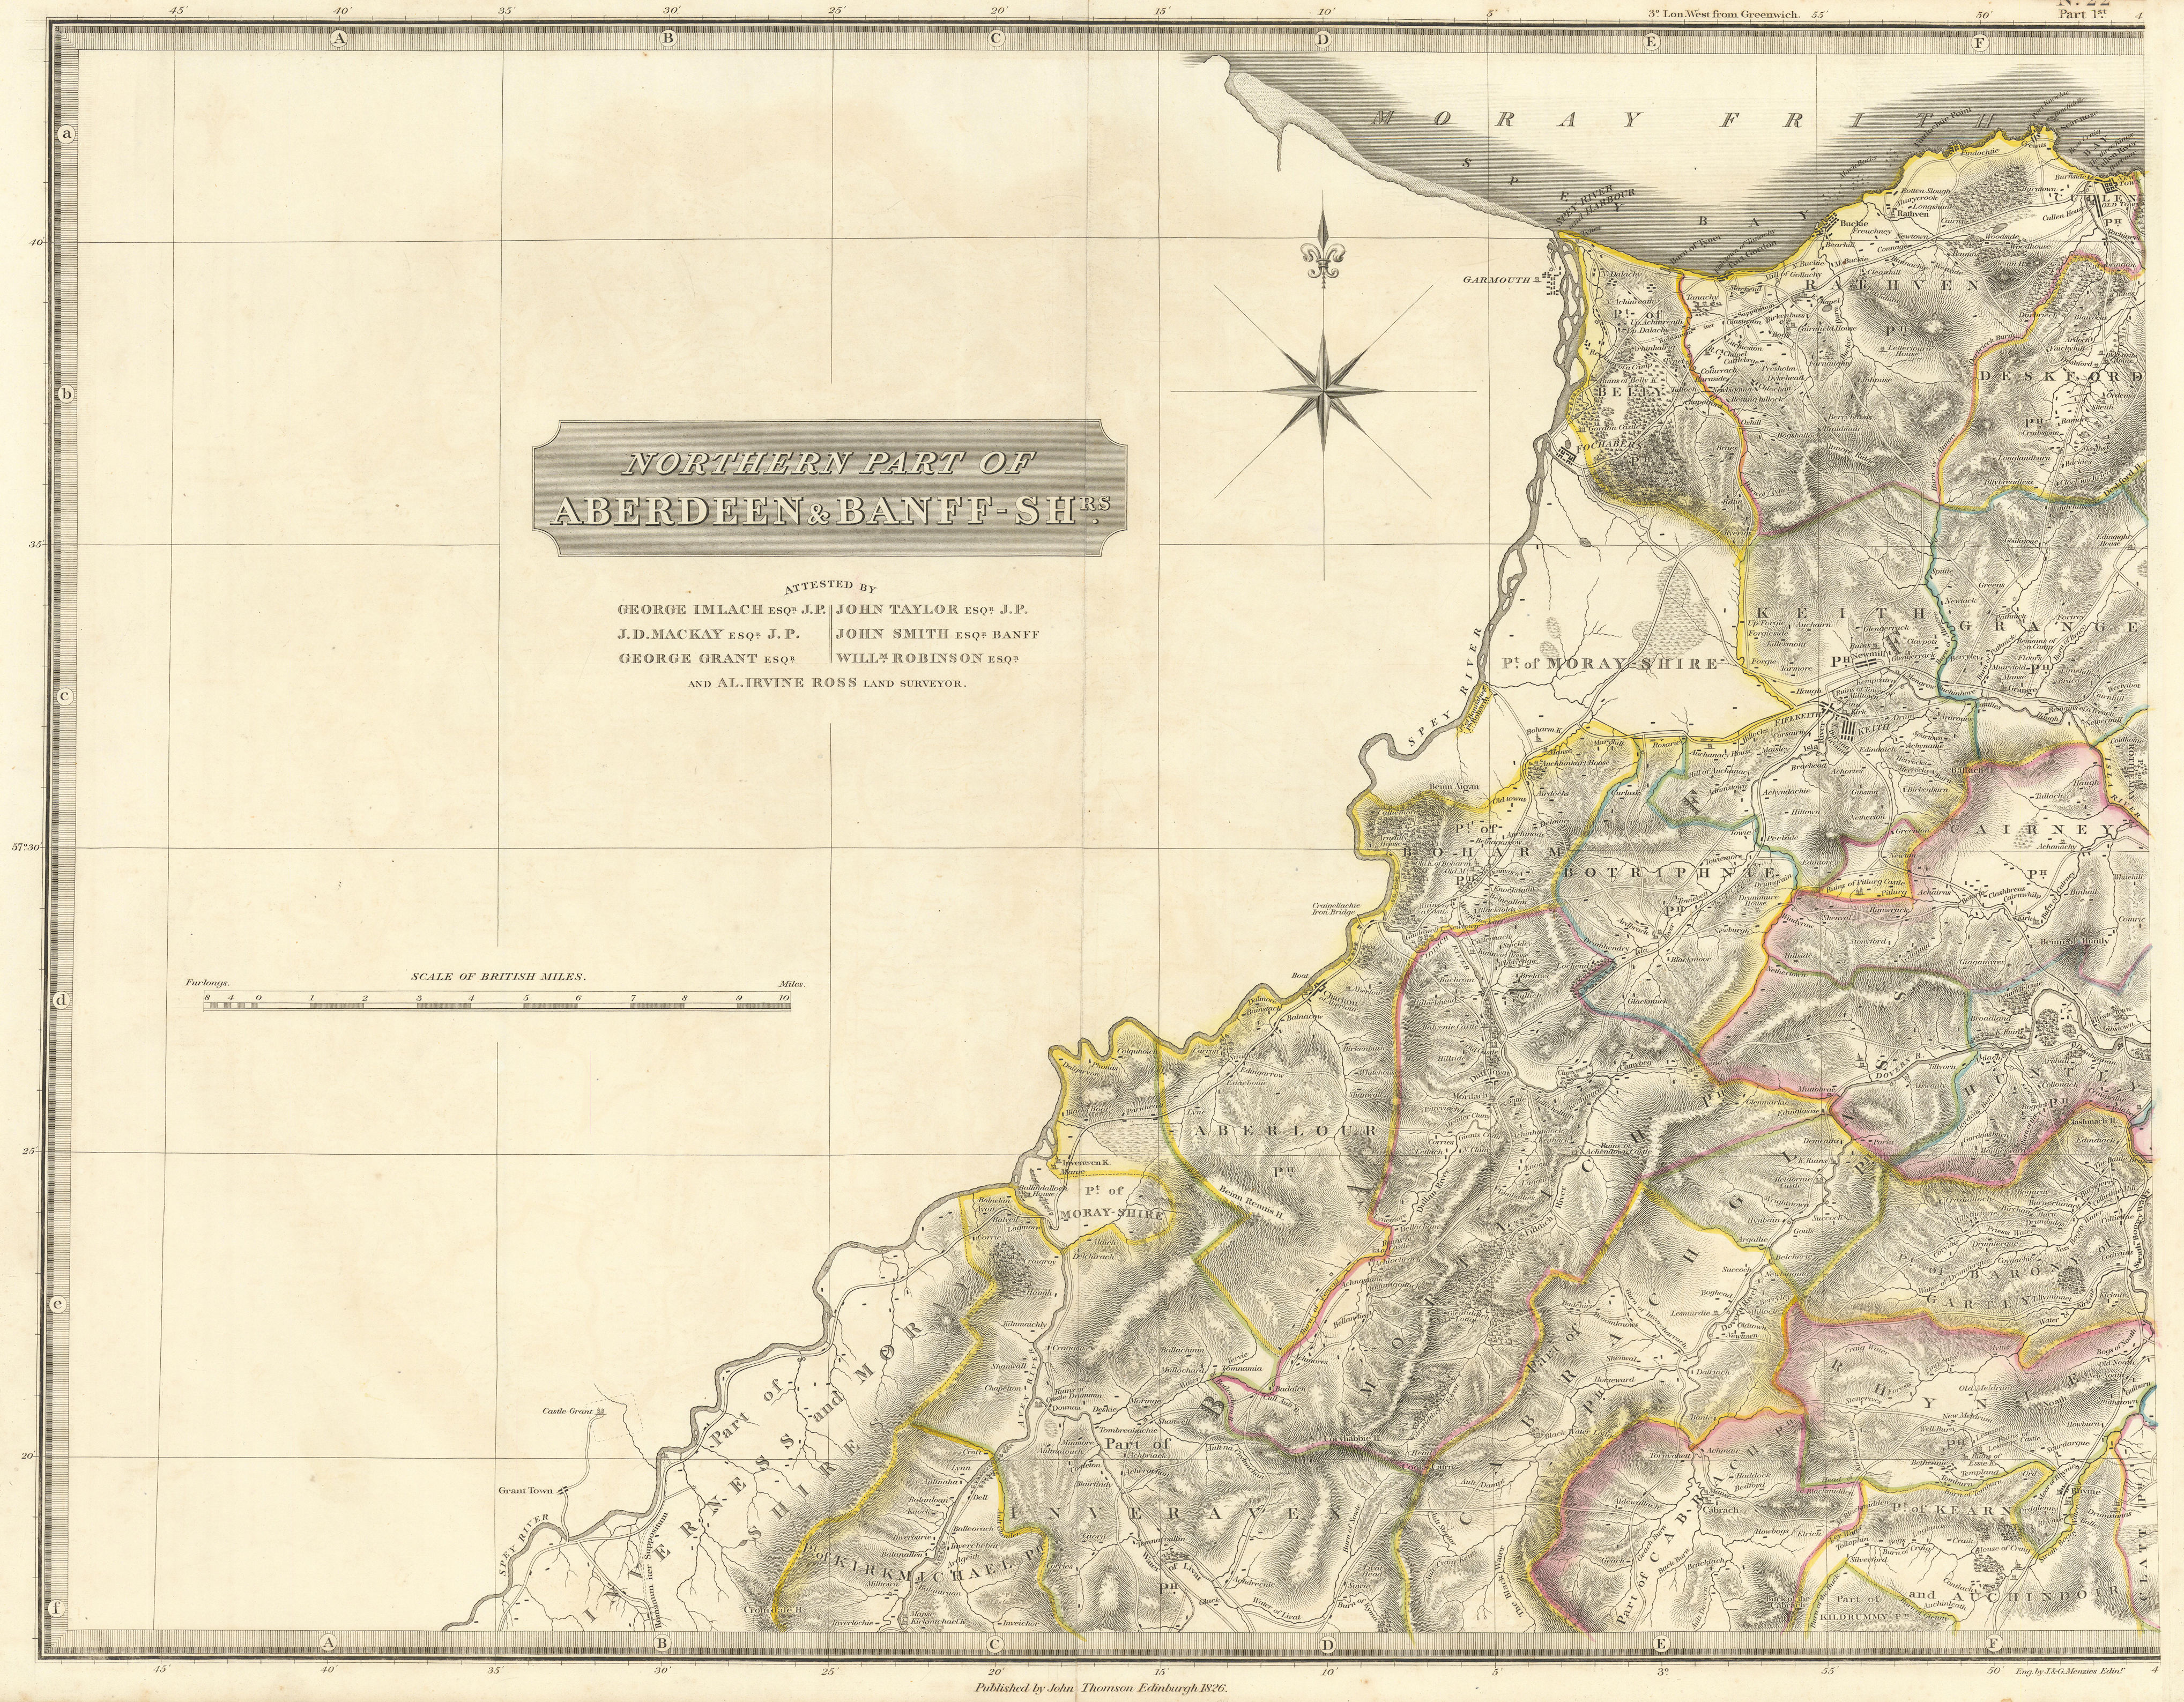 Associate Product Aberdeen & Banffshires north-west. Speyside. Cullen Dufftown. THOMSON 1832 map